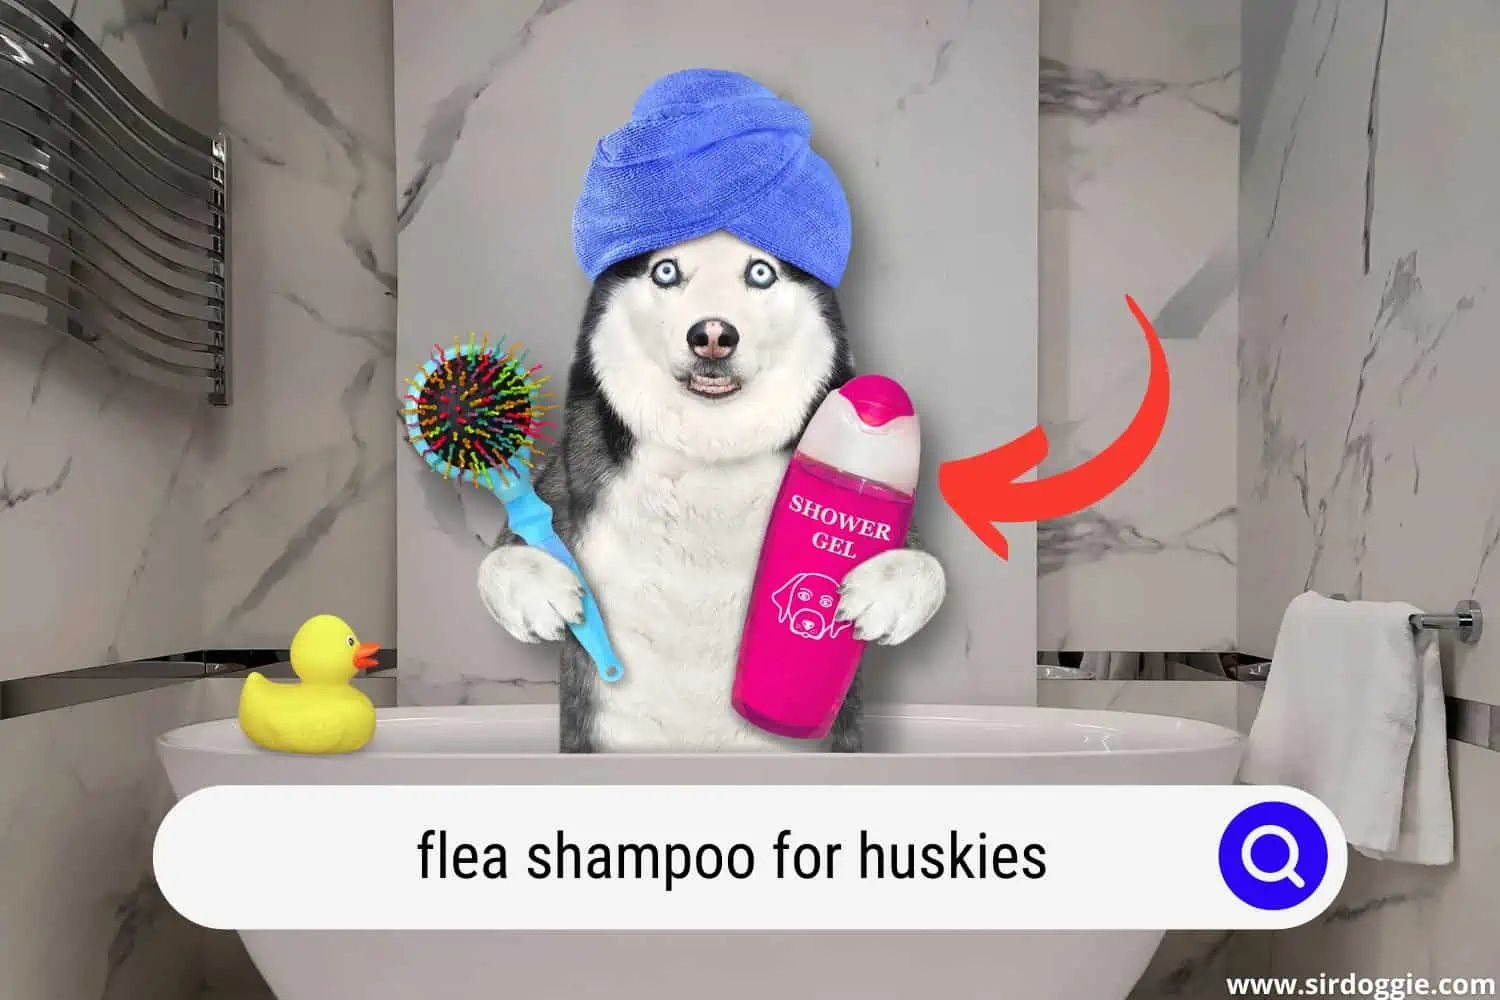 A Husky dog in a bath tub with blue towel on head, holding a hairbrush and flea shampoo